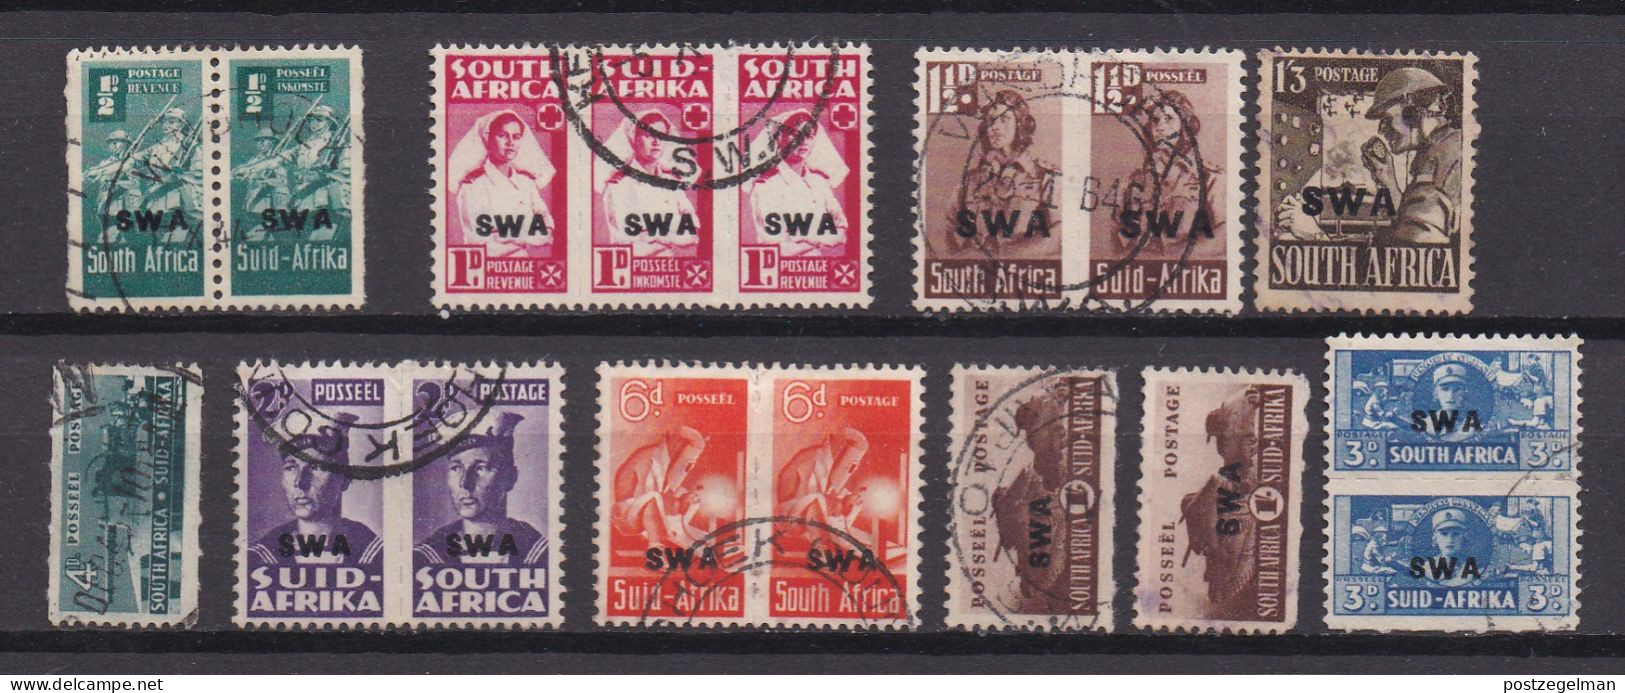 SOUTH WEST AFRICA 1942 Used Stamps 230-245 War Effort Reduced Sizes (not Complete) - Afrique Du Sud-Ouest (1923-1990)